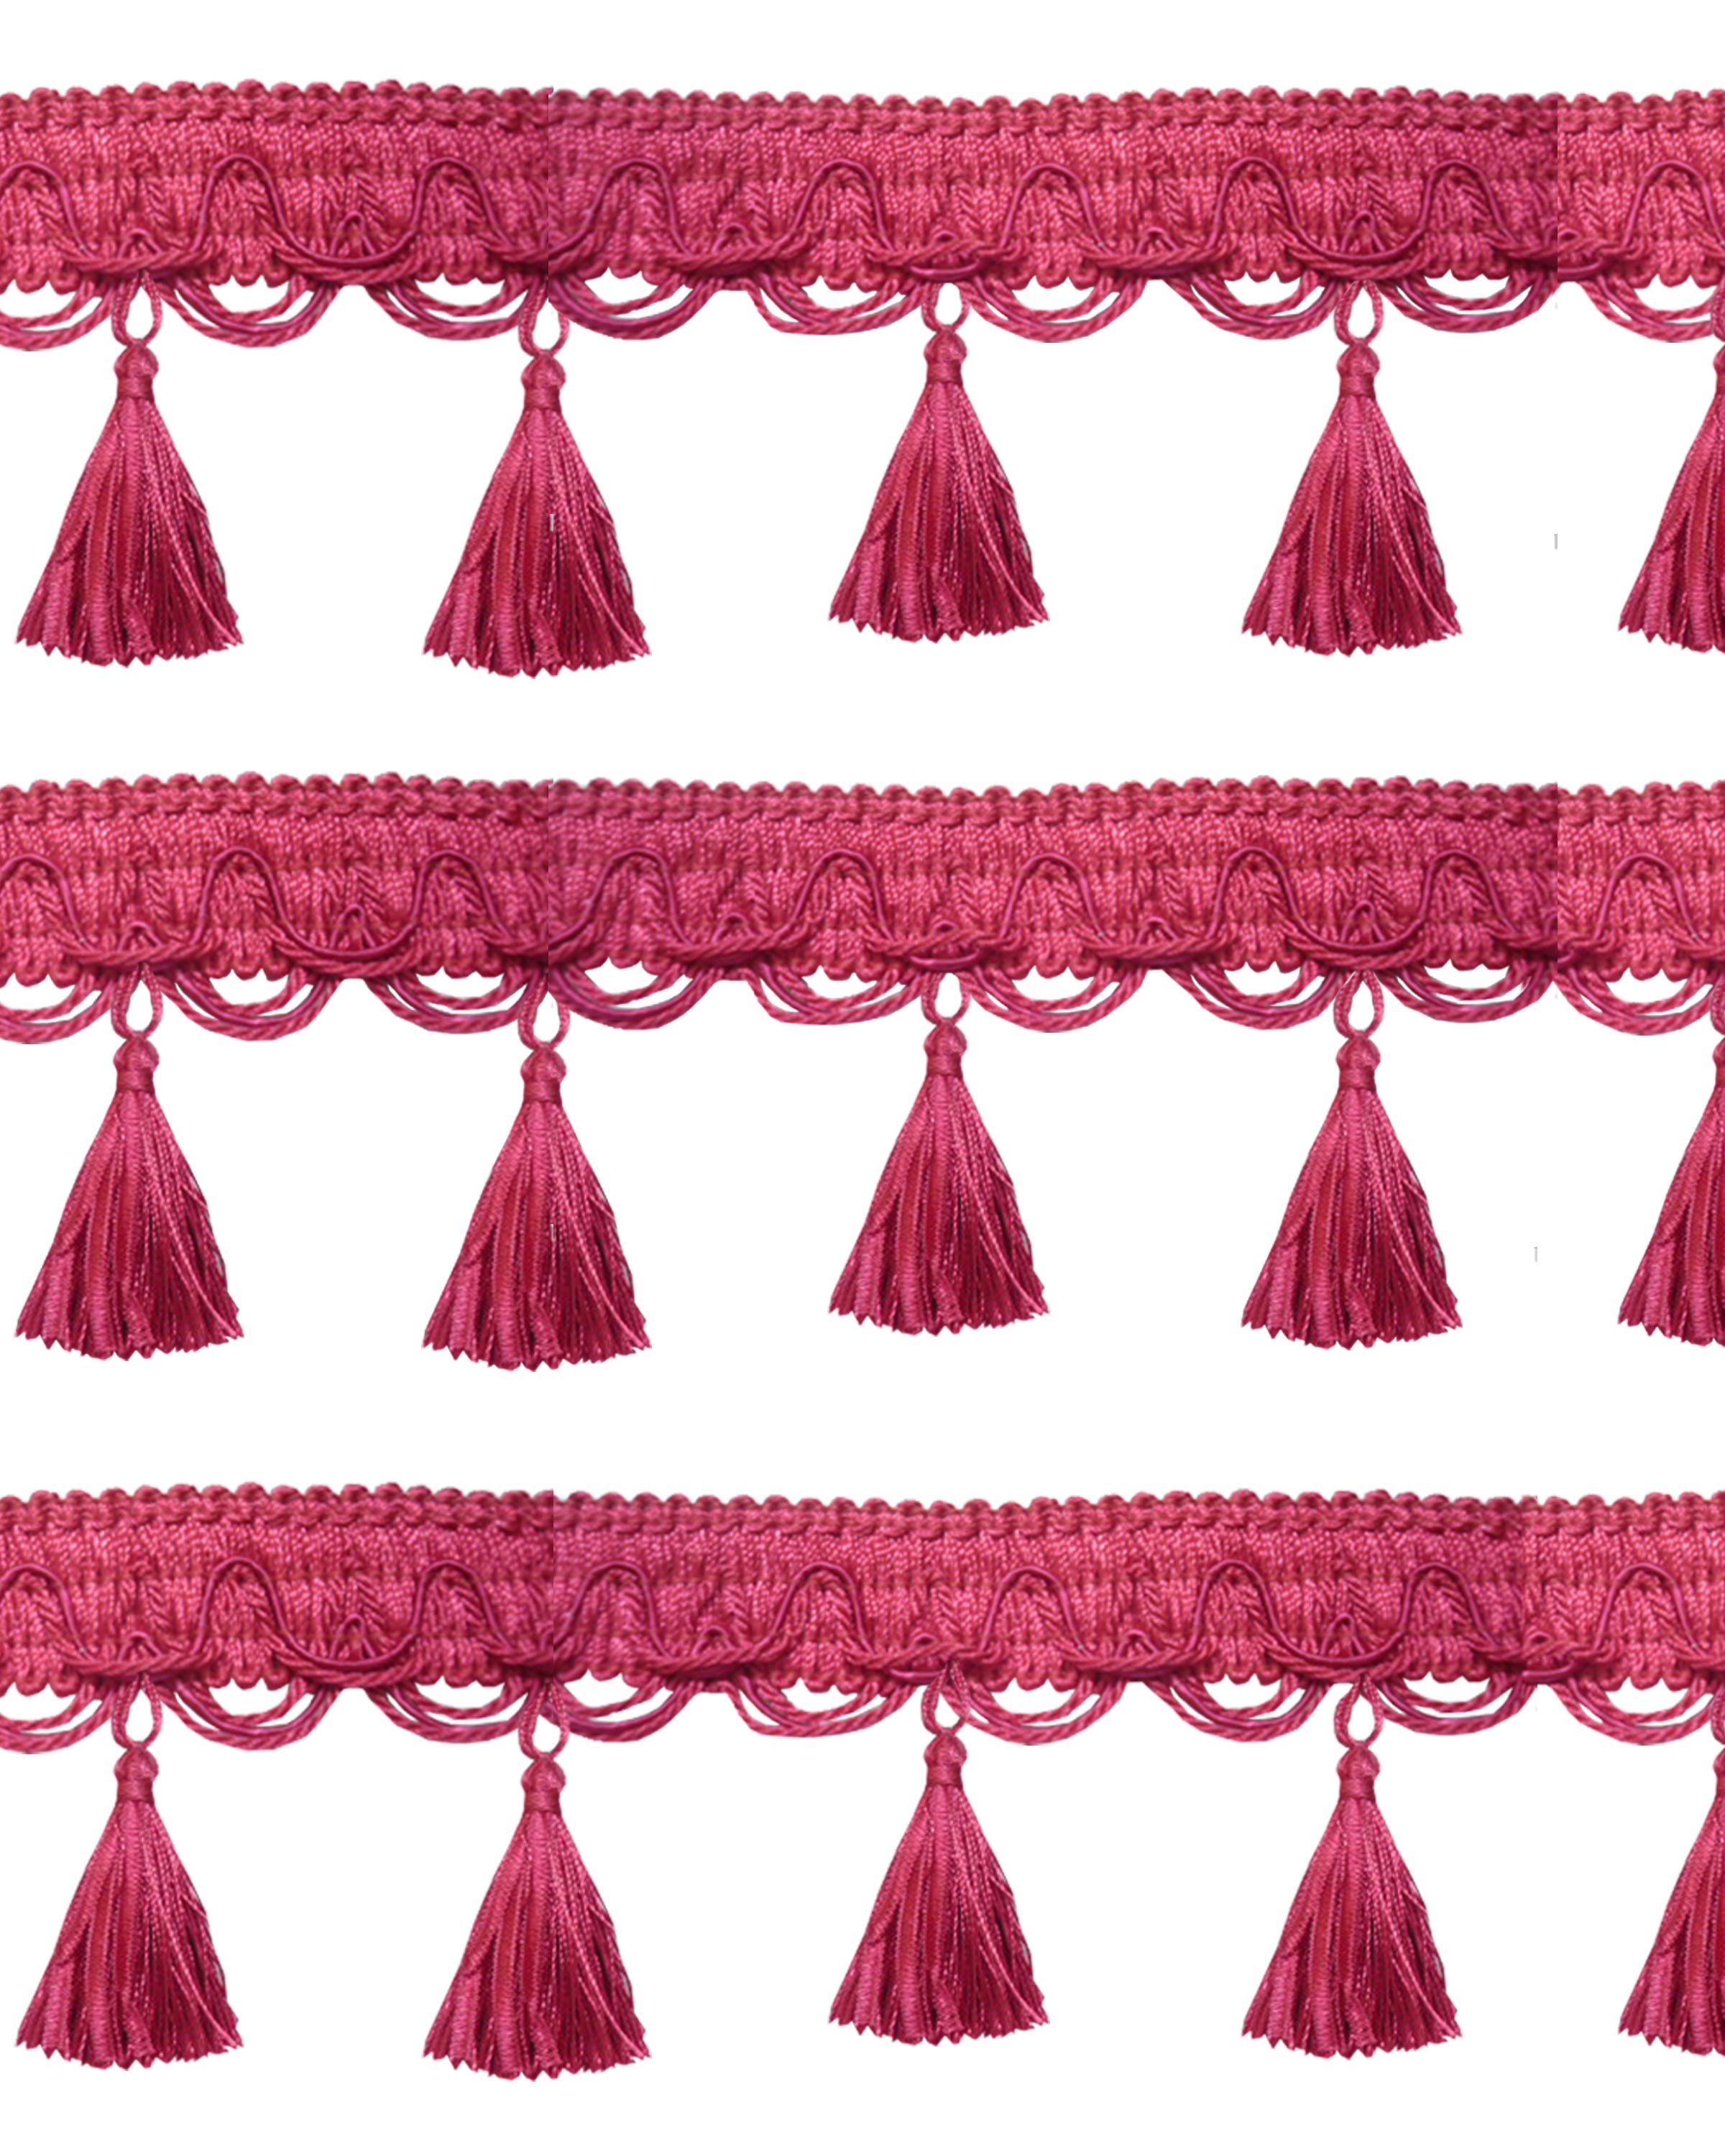 Fringe Tassels - Fuchsia Pink 90mm Price is per 5 metres